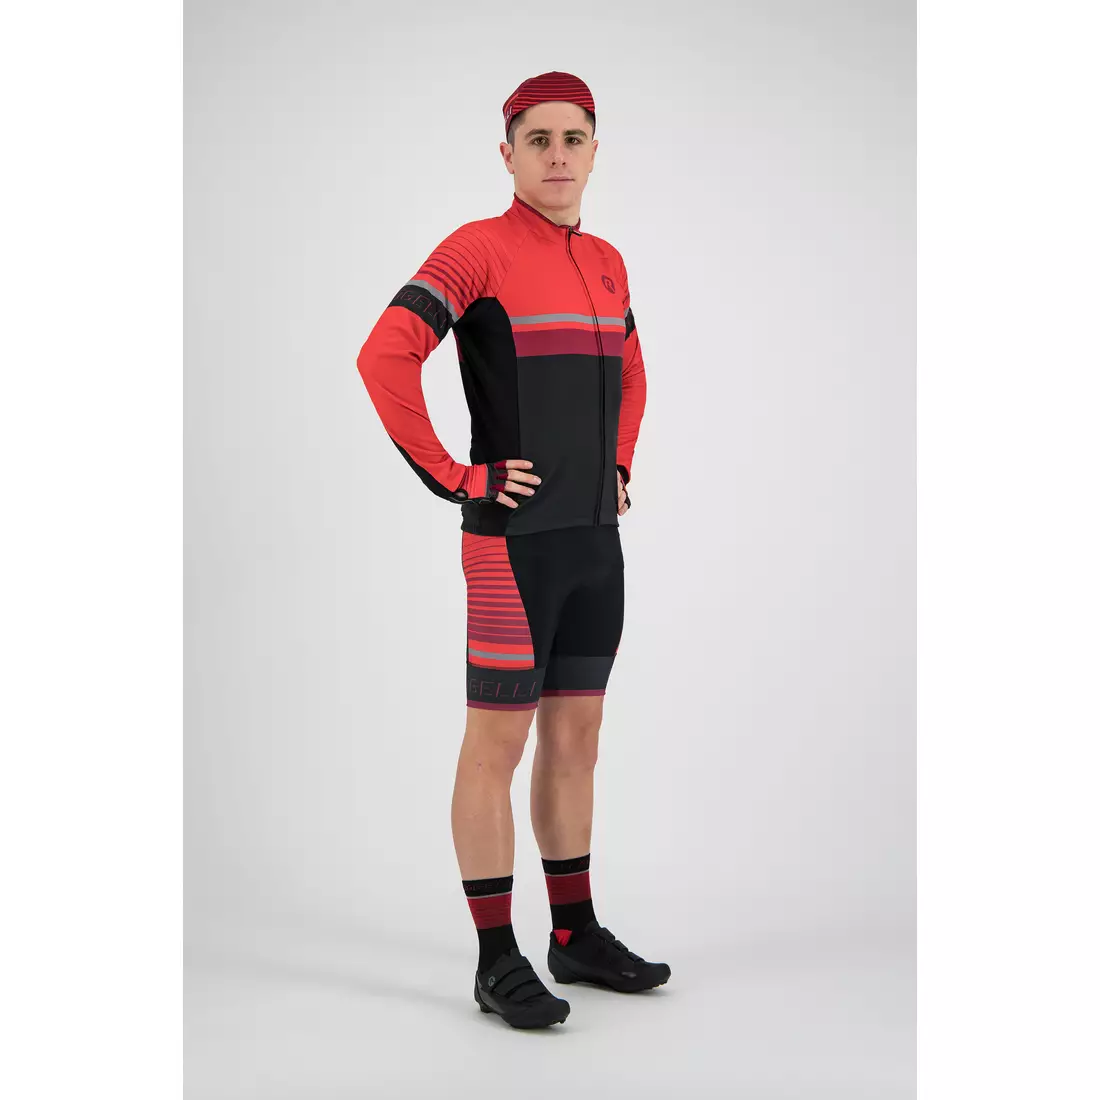 Rogelli HERO 001.267 Men bicycle sweatshirt Black/ Red/ Bordoux